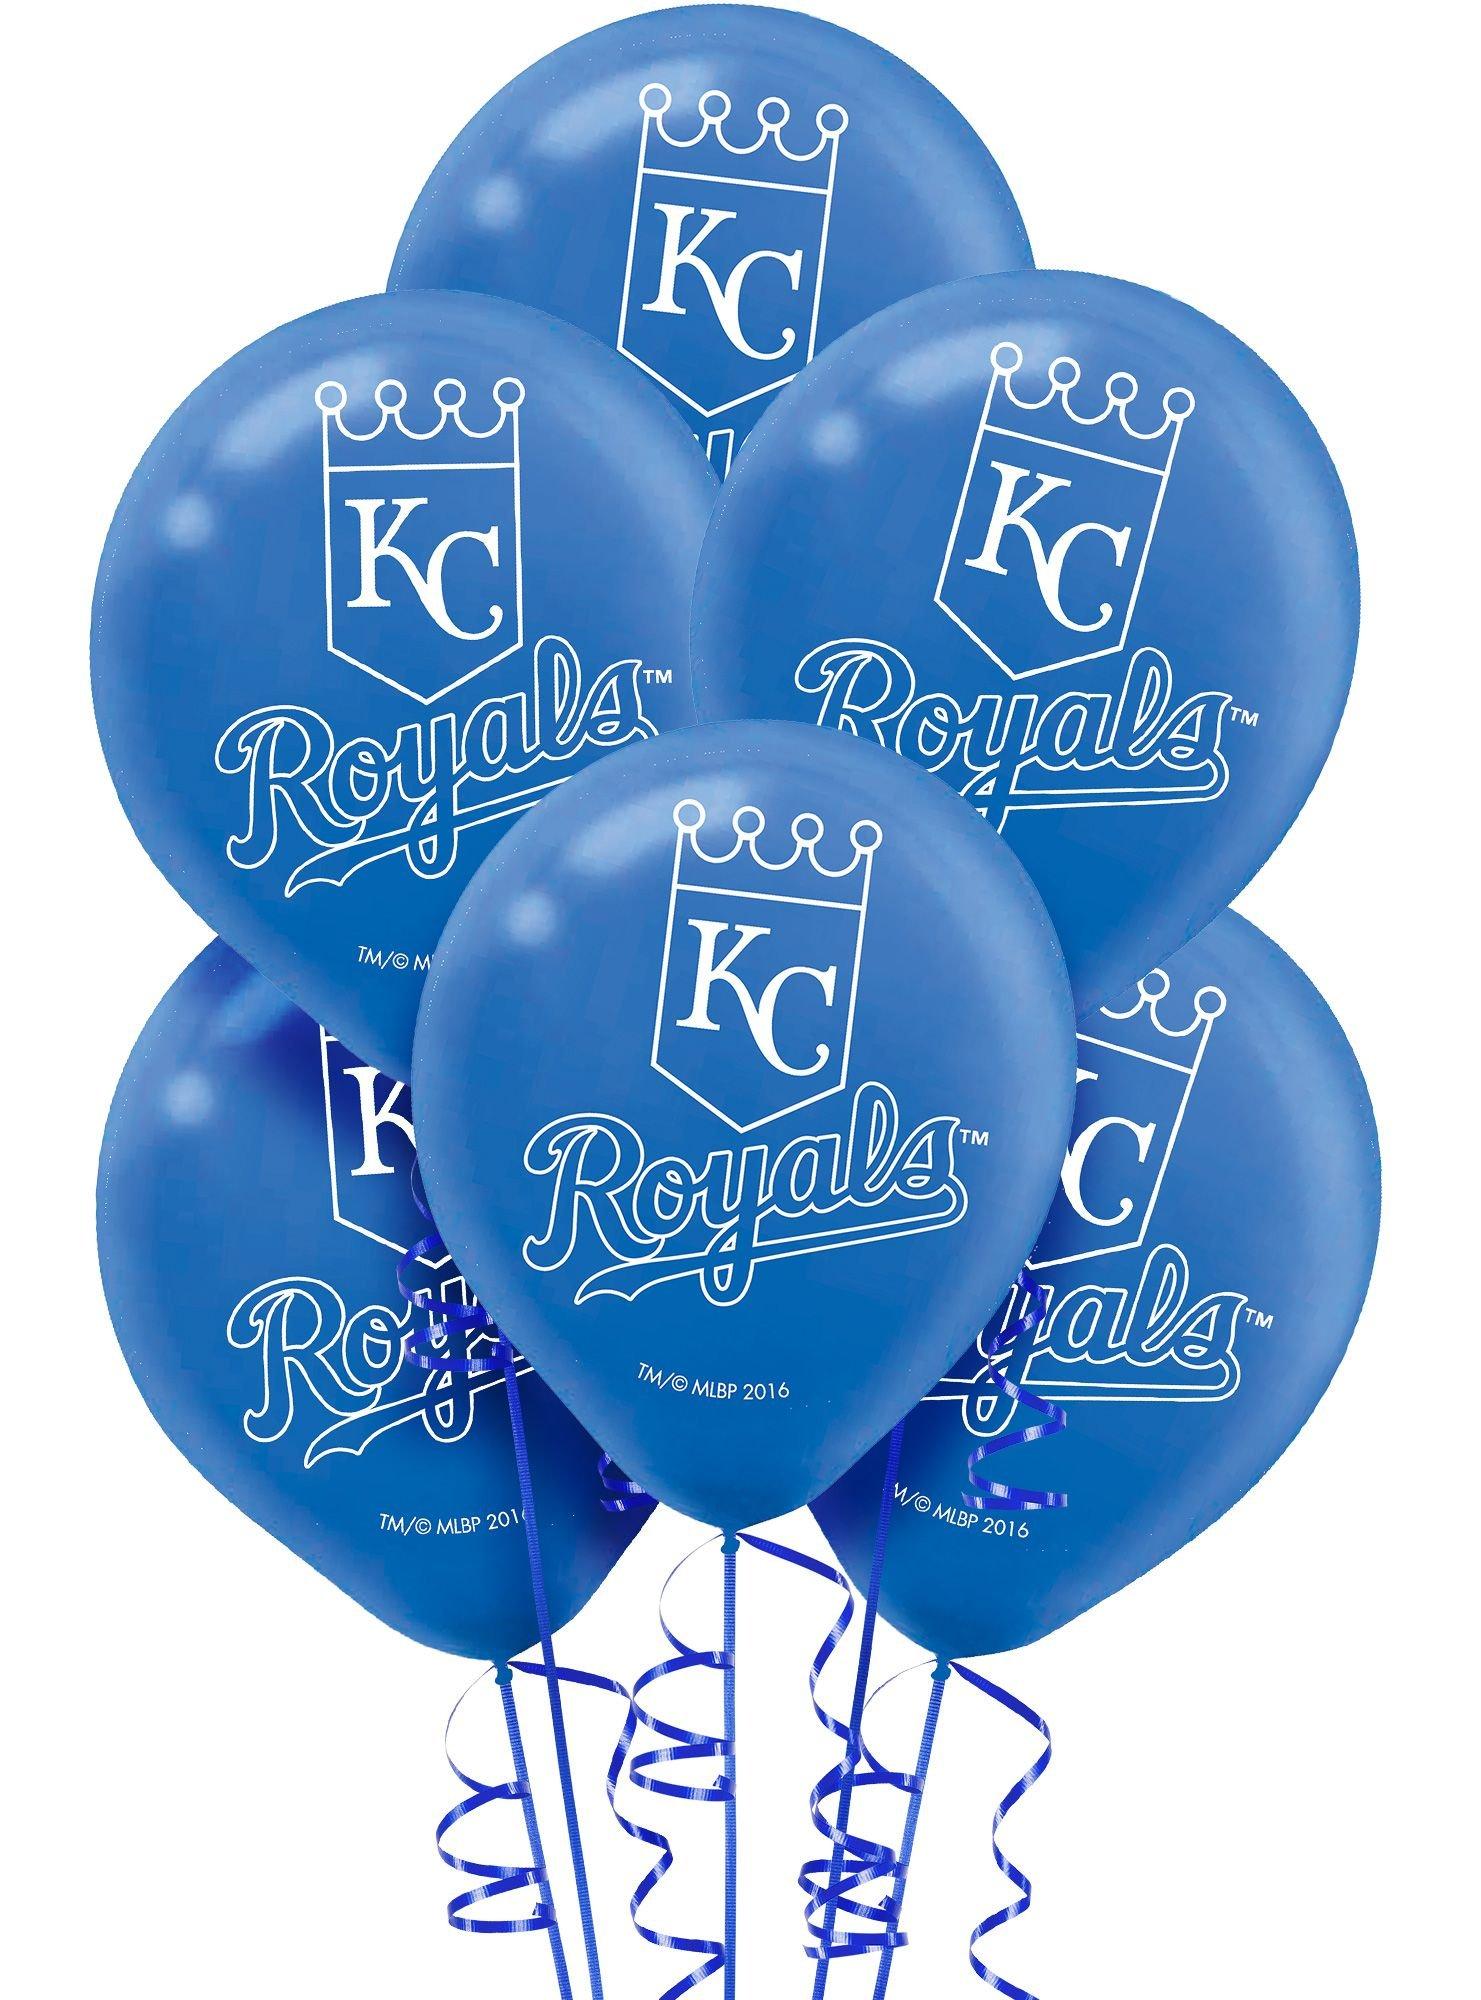 MLB Kansas City Royals Cookie Bouquet